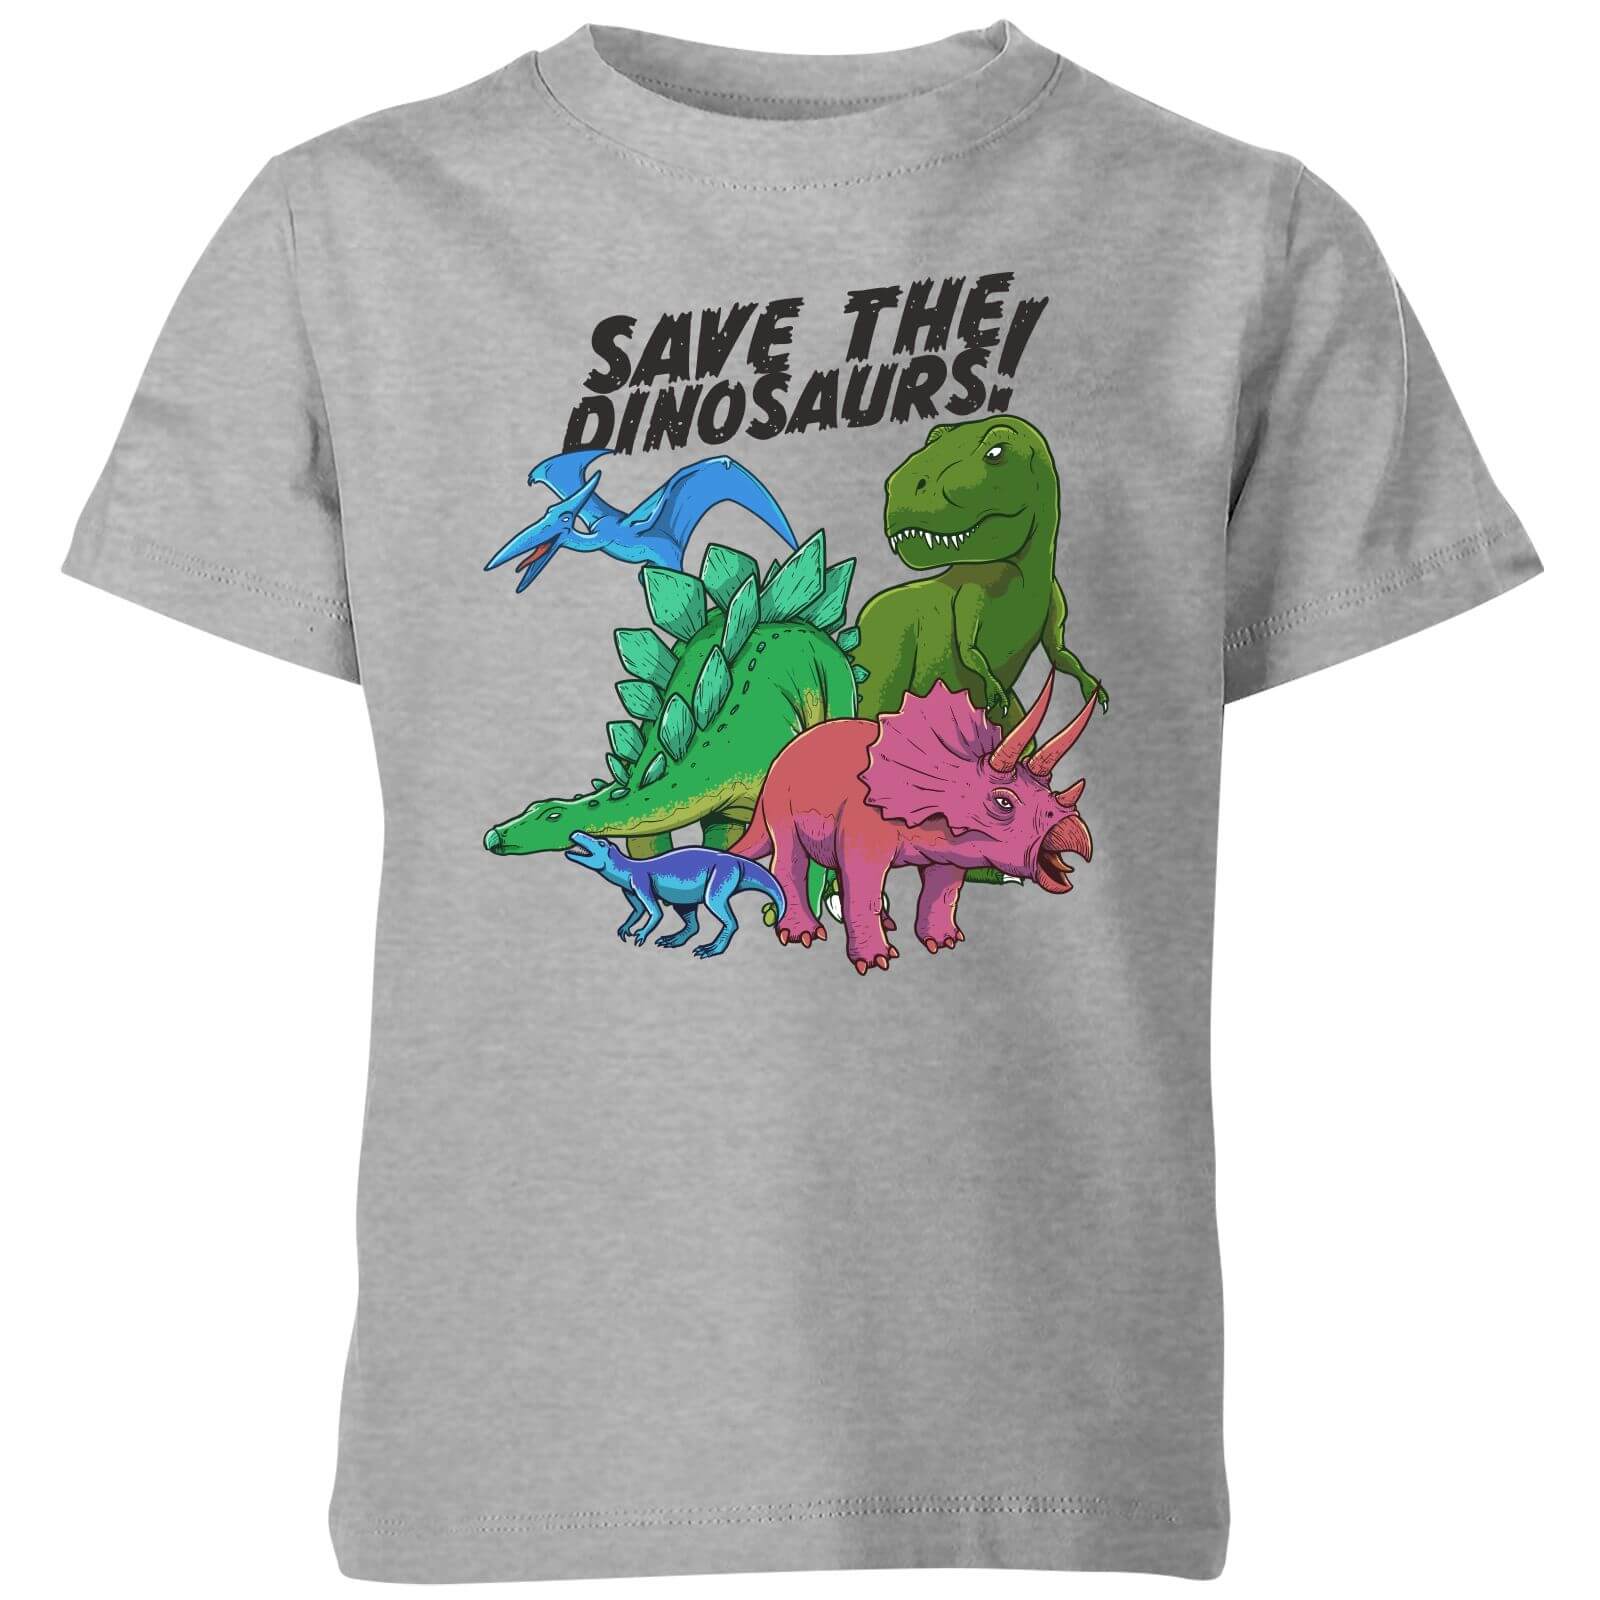 Save The Dinosaurs Kids' T-Shirt - Grey - 3-4 Years - Grey